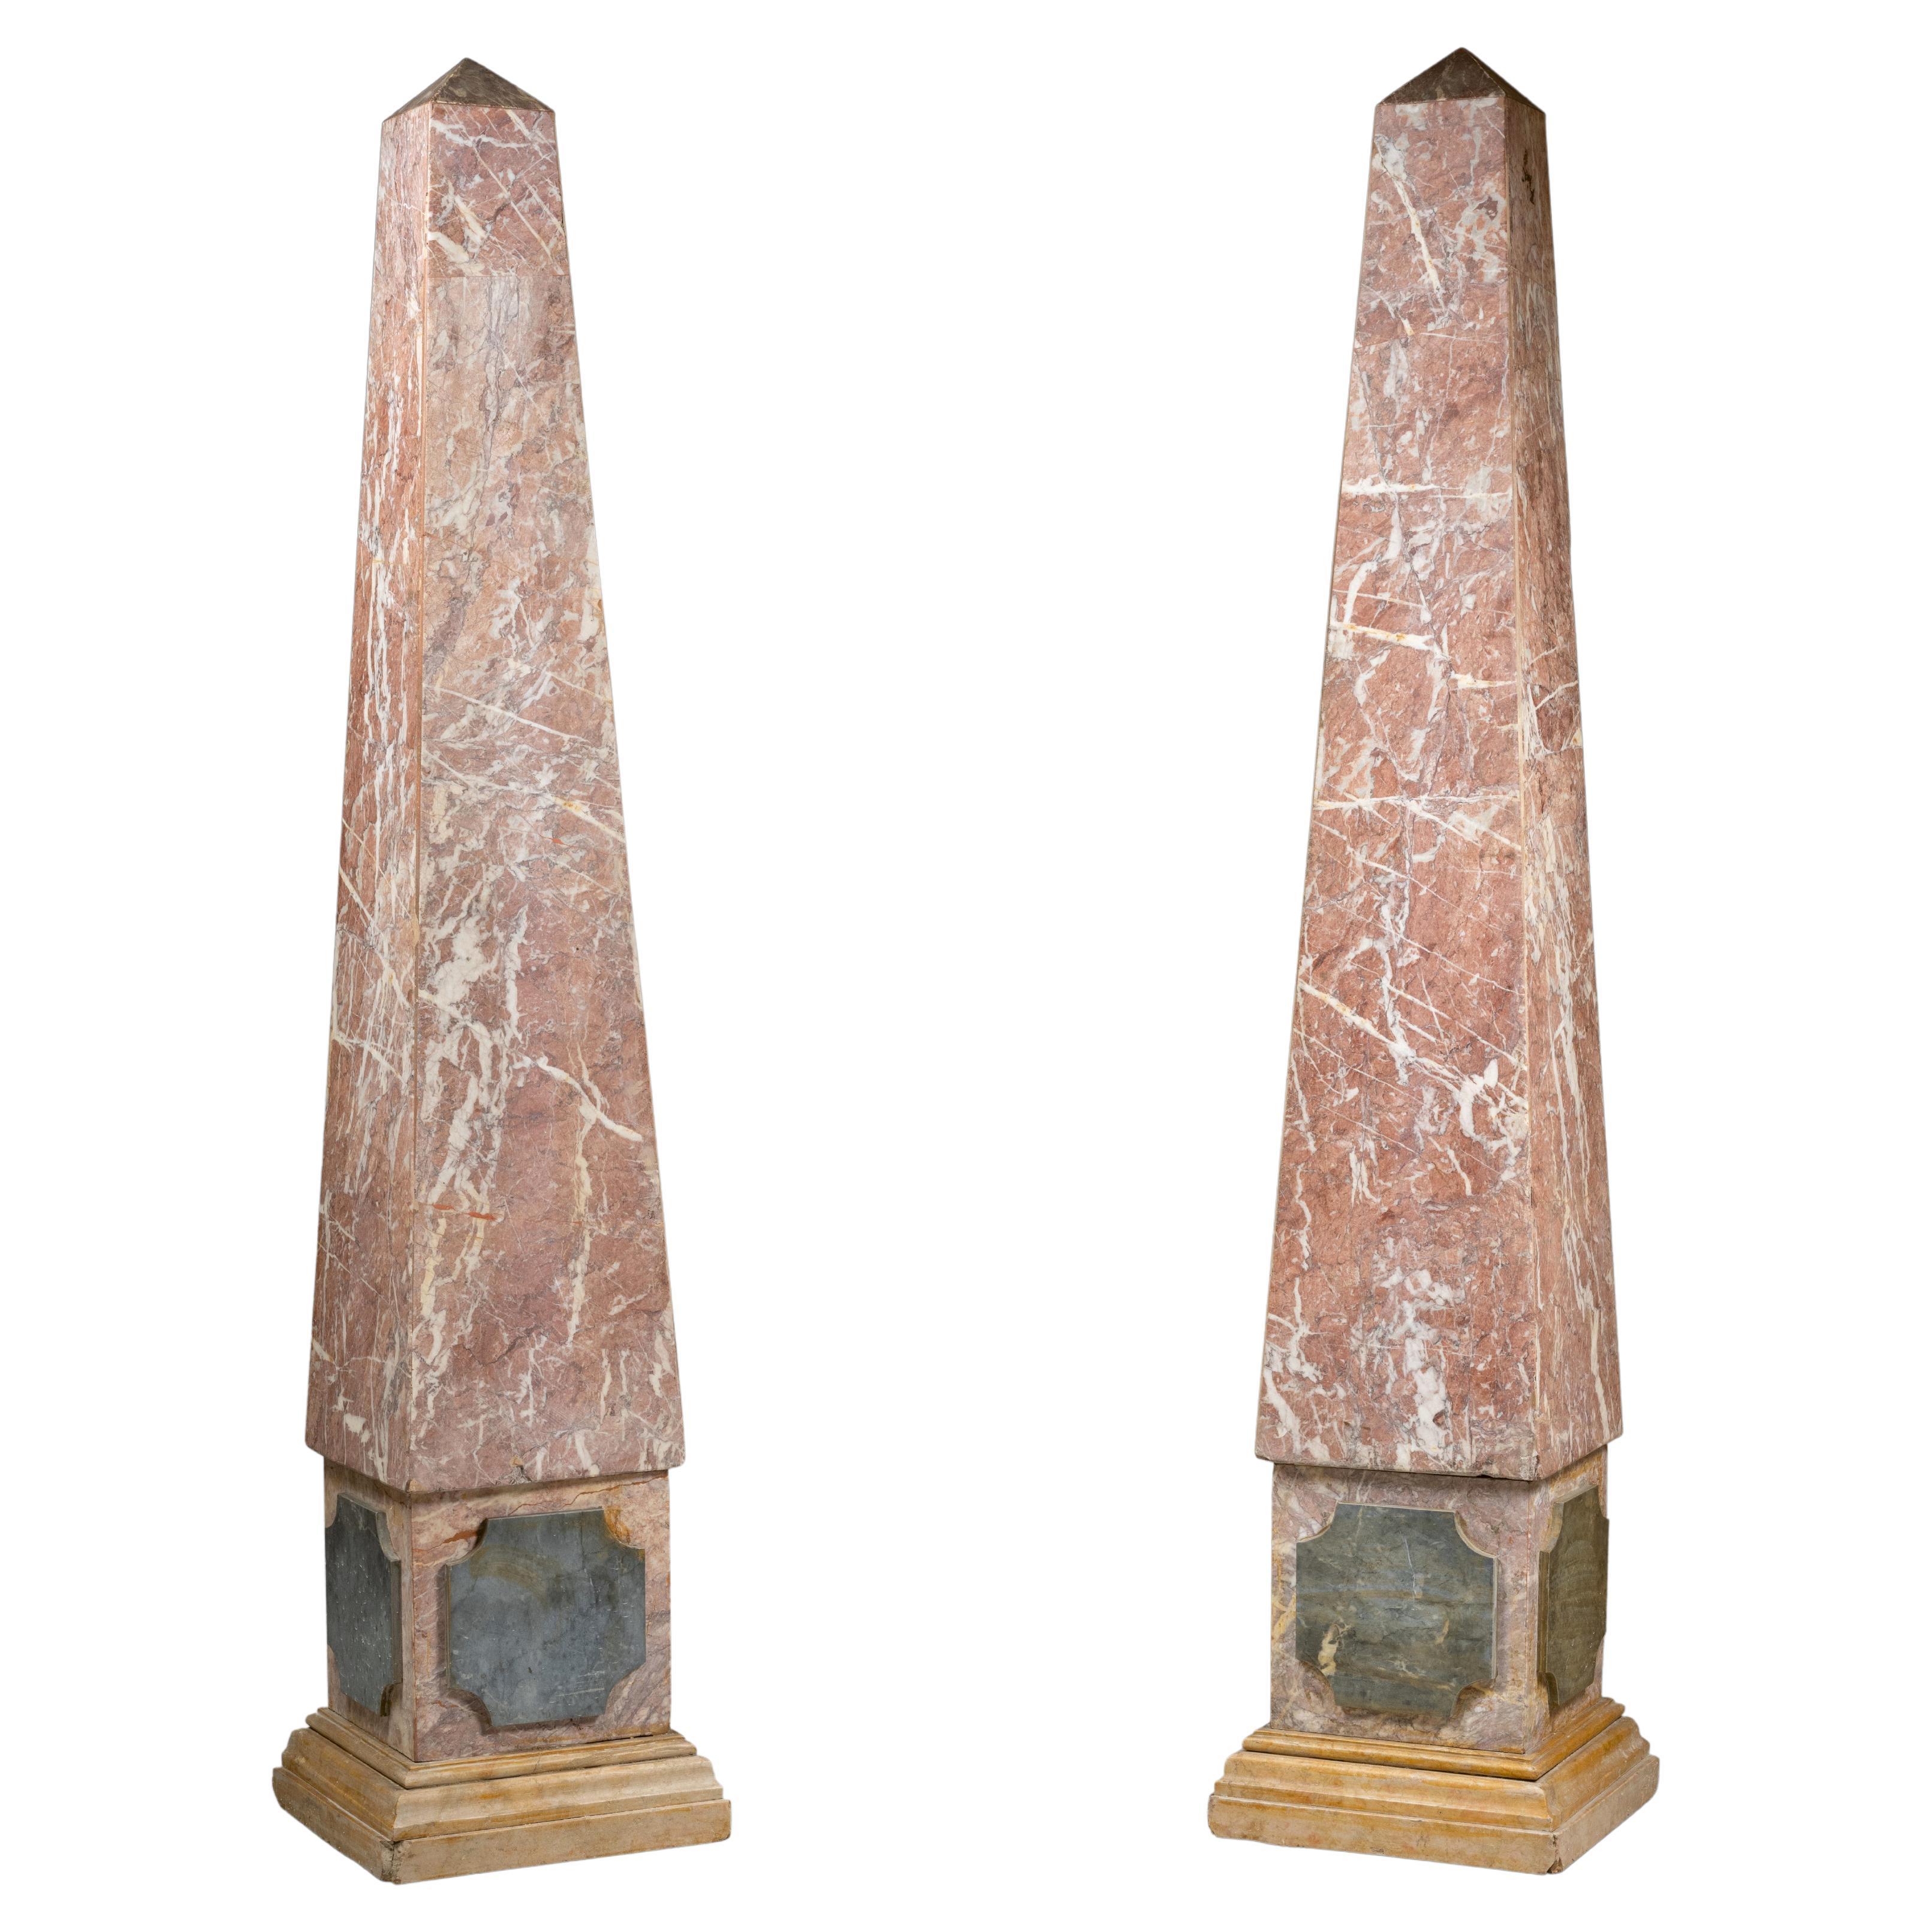 Italian 19th century pair of very tall decorative marble obelisks